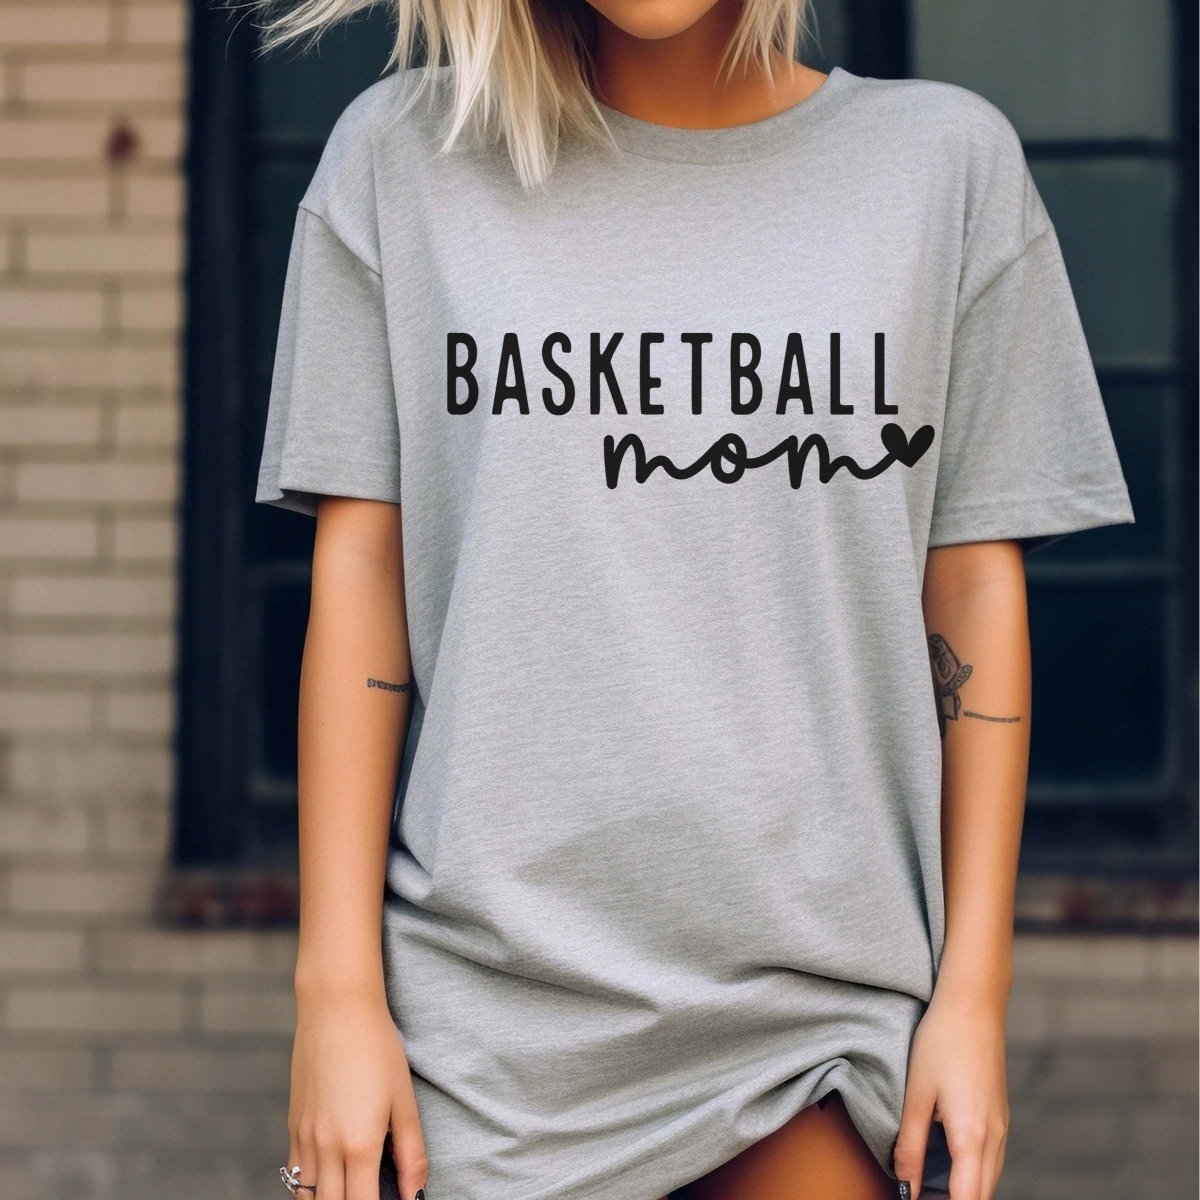 Basketball Mom Tee - Limeberry Designs